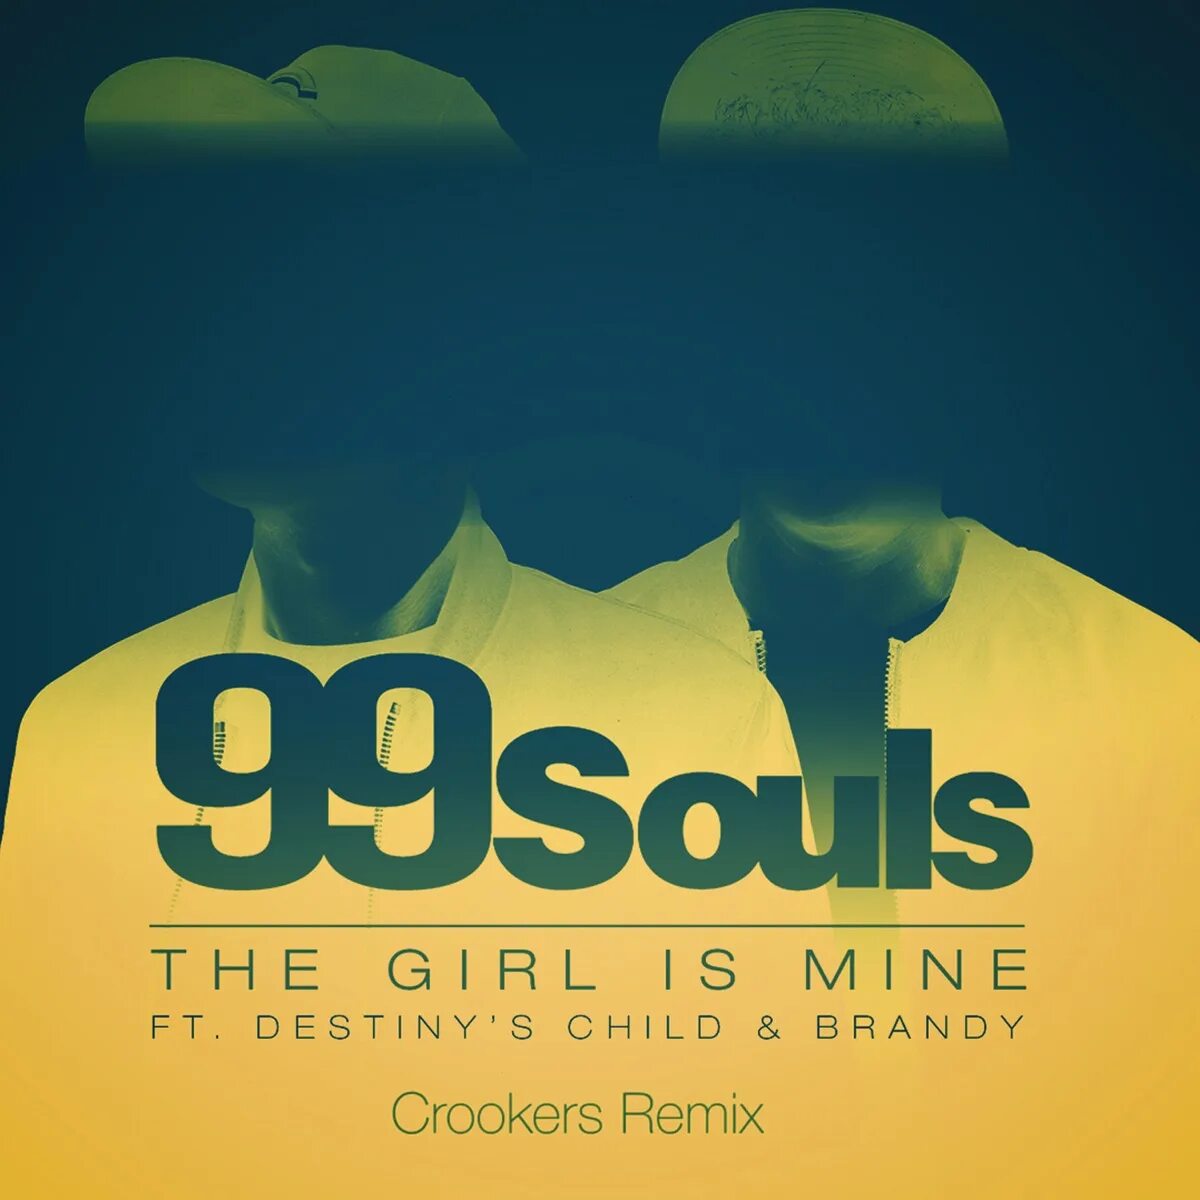 My mine mp 3. 99 Souls. The girl is mine. The girl talk группа. He girl is mine (featuring Destiny's child & Brandy.